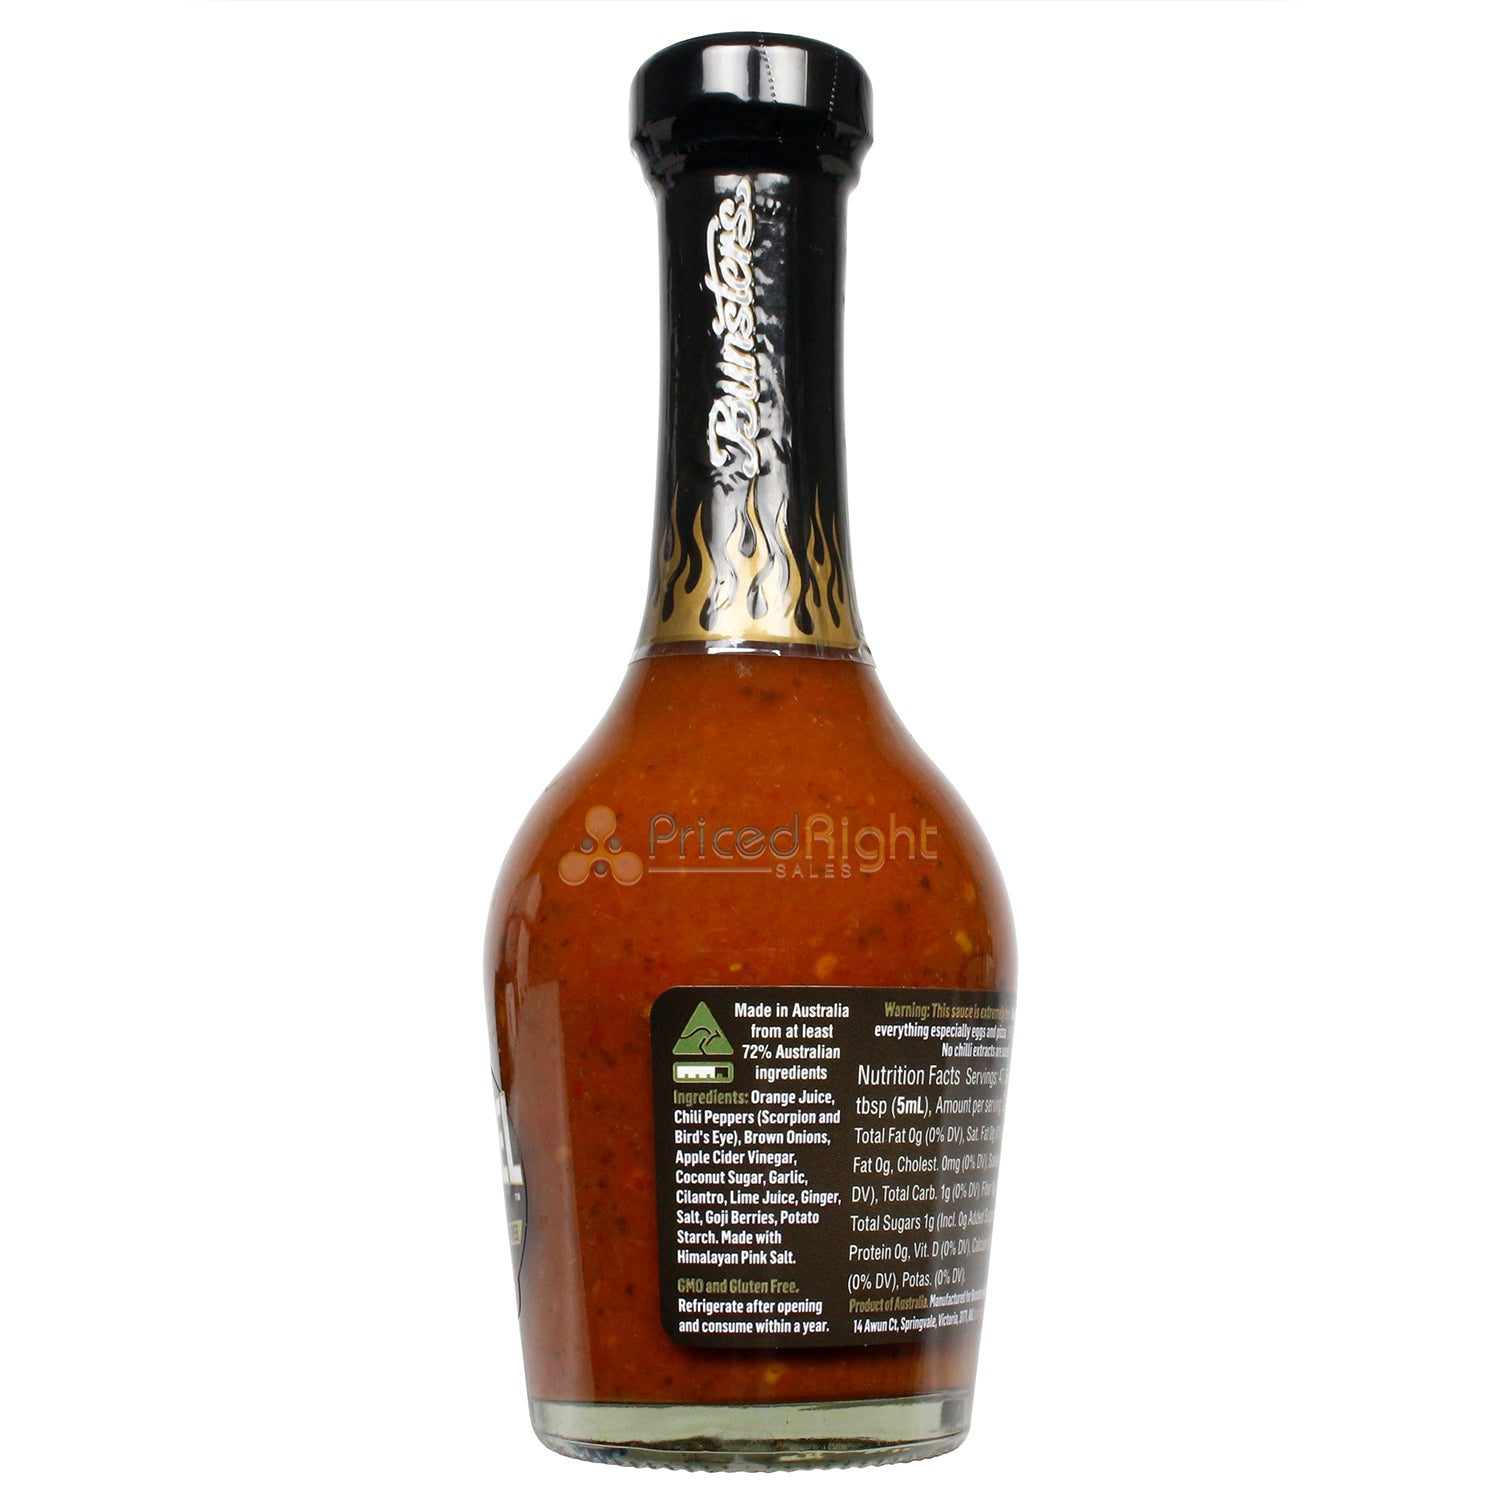 Bunsters Black Label Hot Sauce 16/10 Heat Scorpion Peppers Gluten Free 8 Ounce